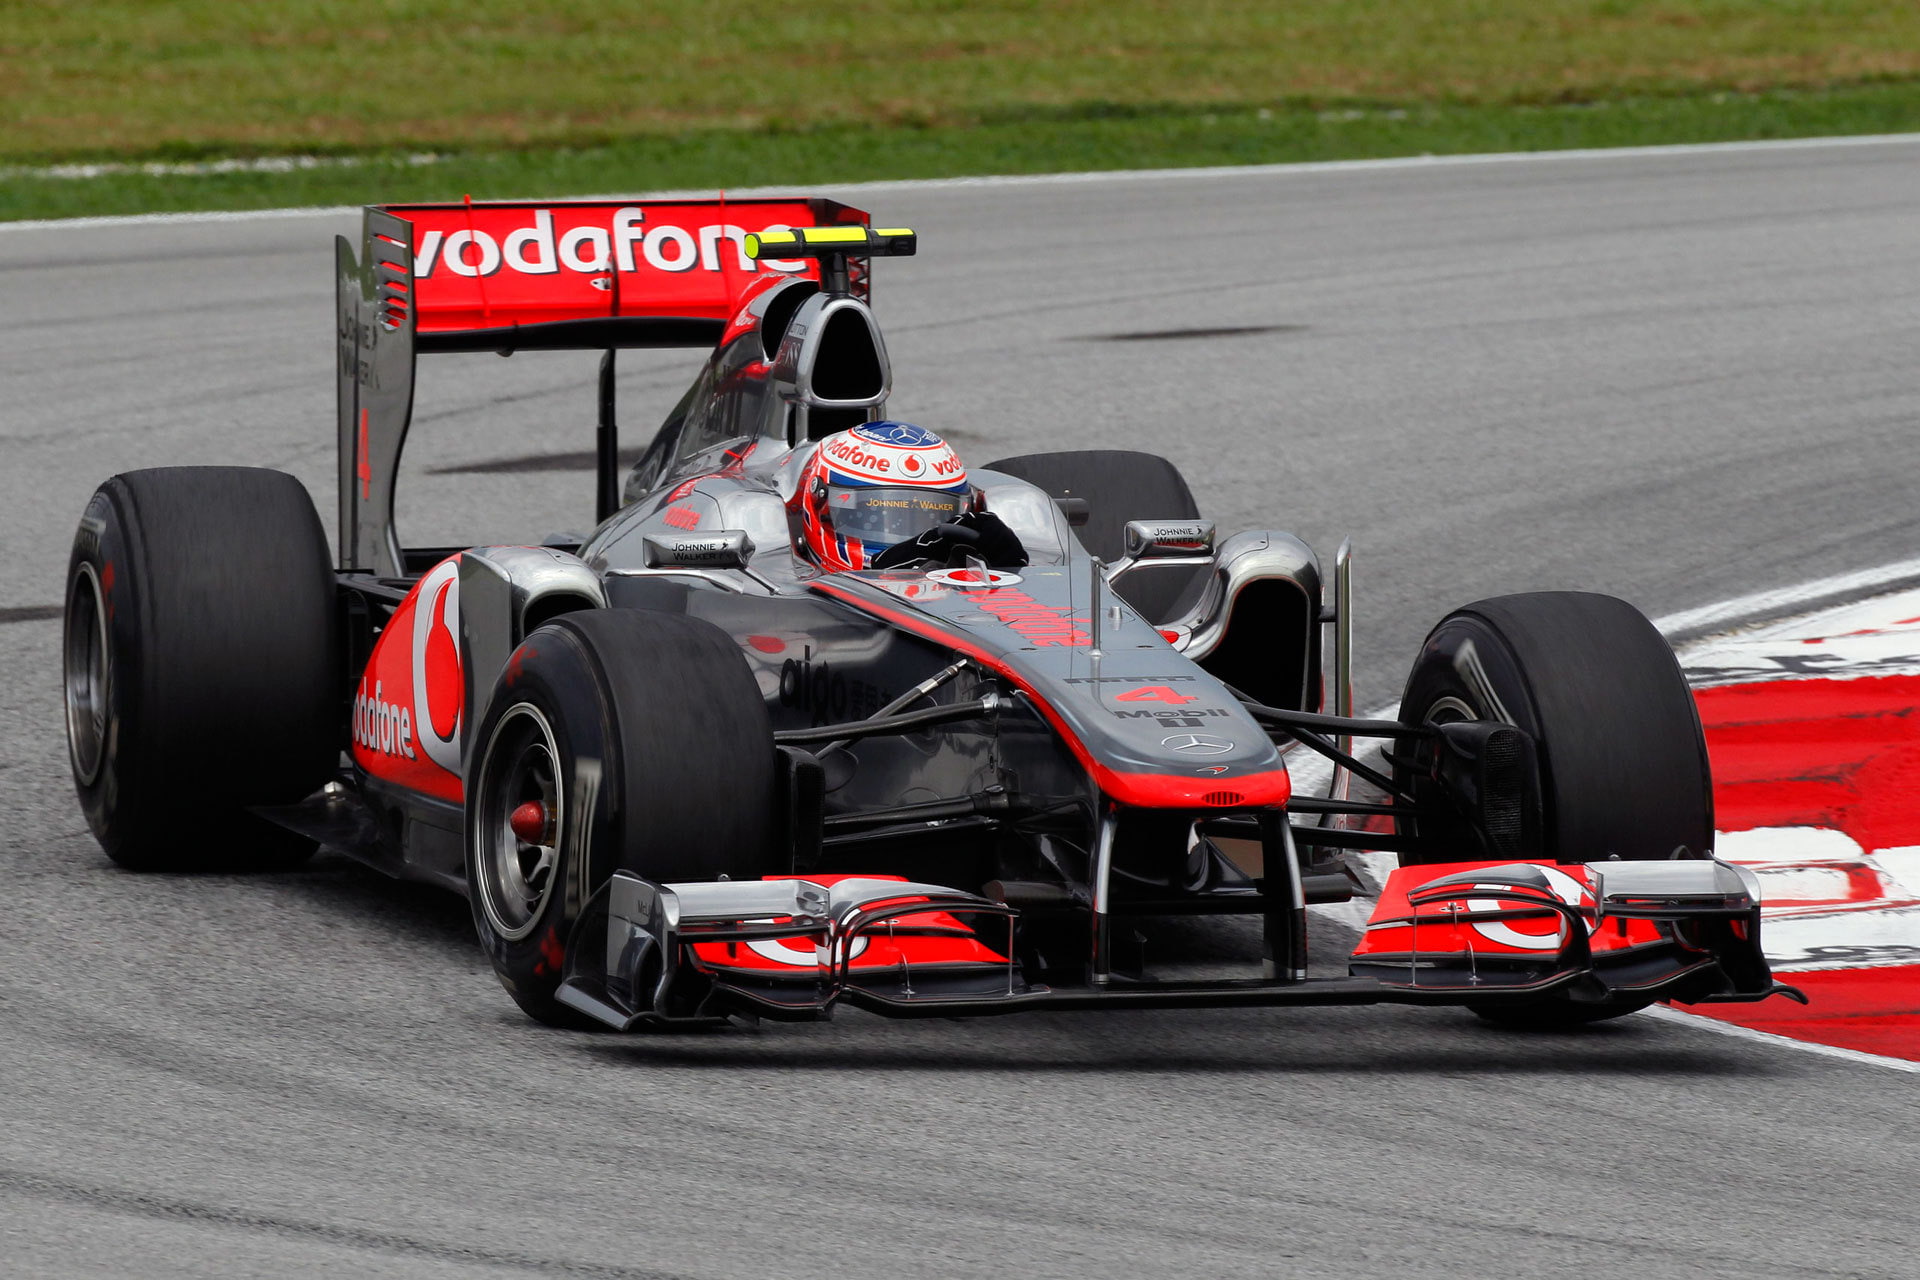 red and black Vodafone F1, McLaren, formula 1, 2011, Malaysian GP